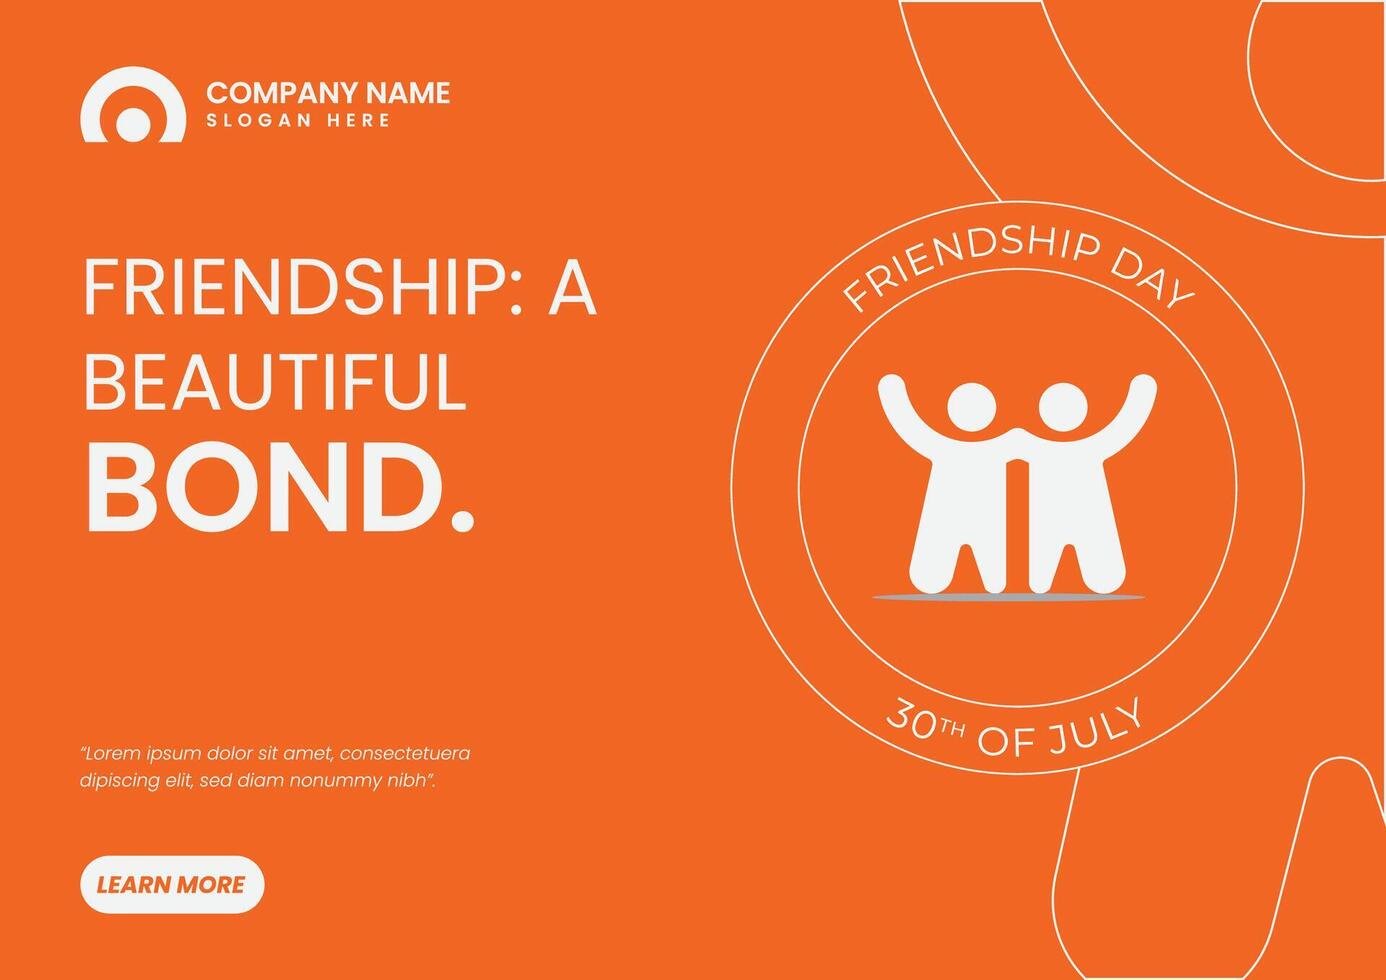 Friendship Day Social Media Banner Design Template vector